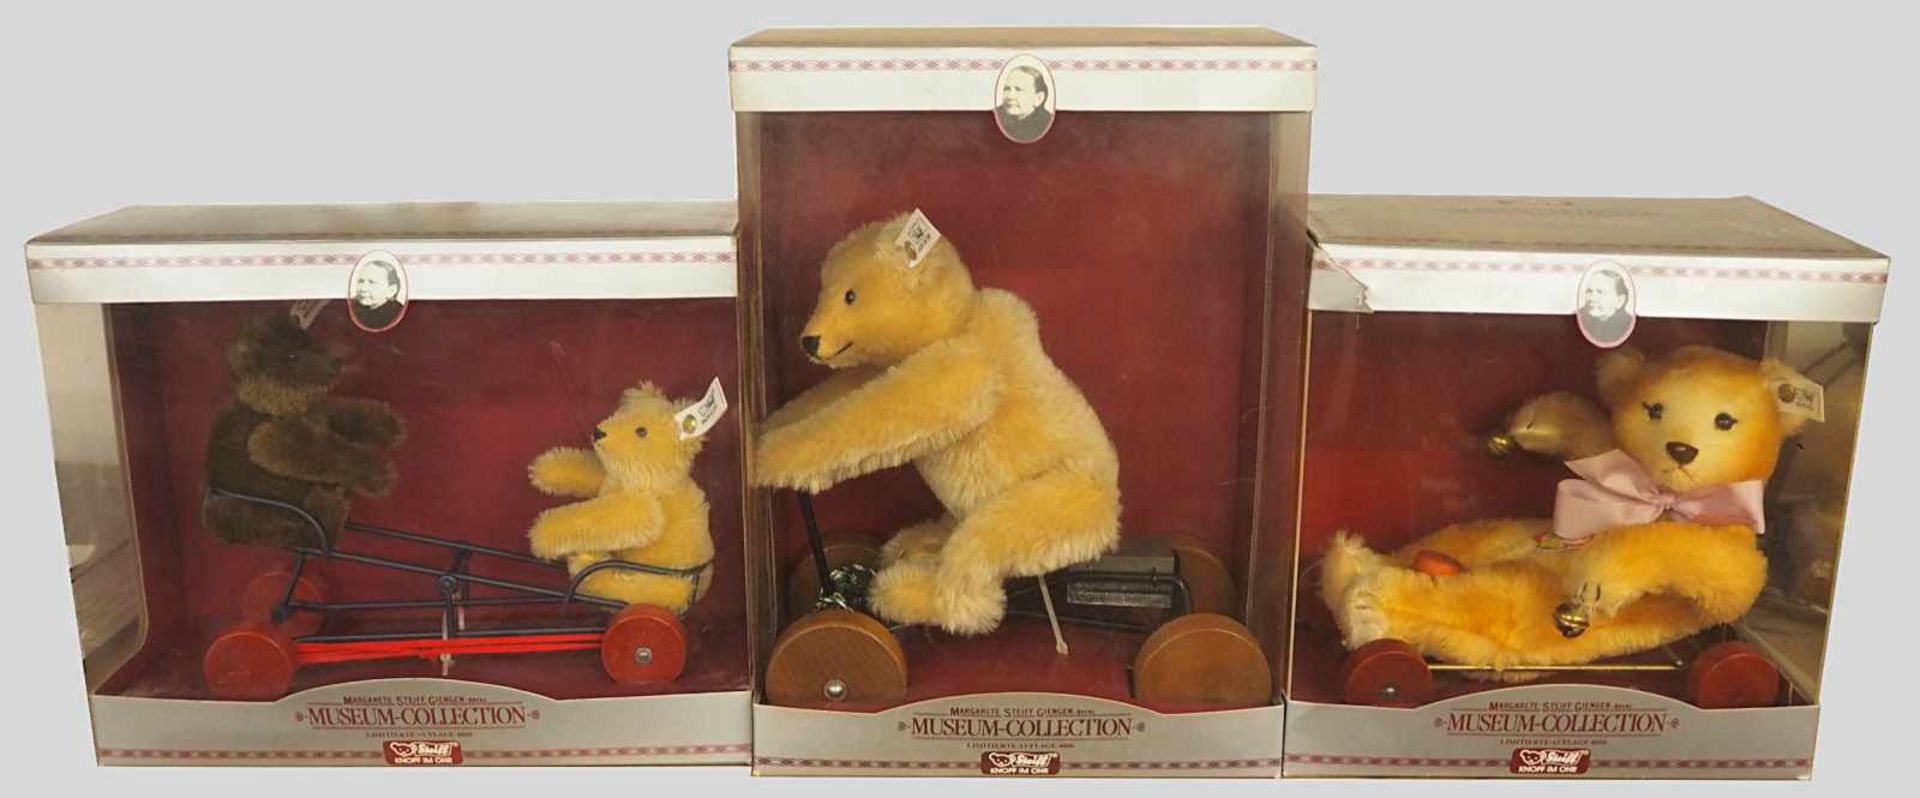 3 Teddybären/Sammlerteddys STEIFF "Museums Collection" Replika"Wiwag" "Record Teddy" "Babybär auf